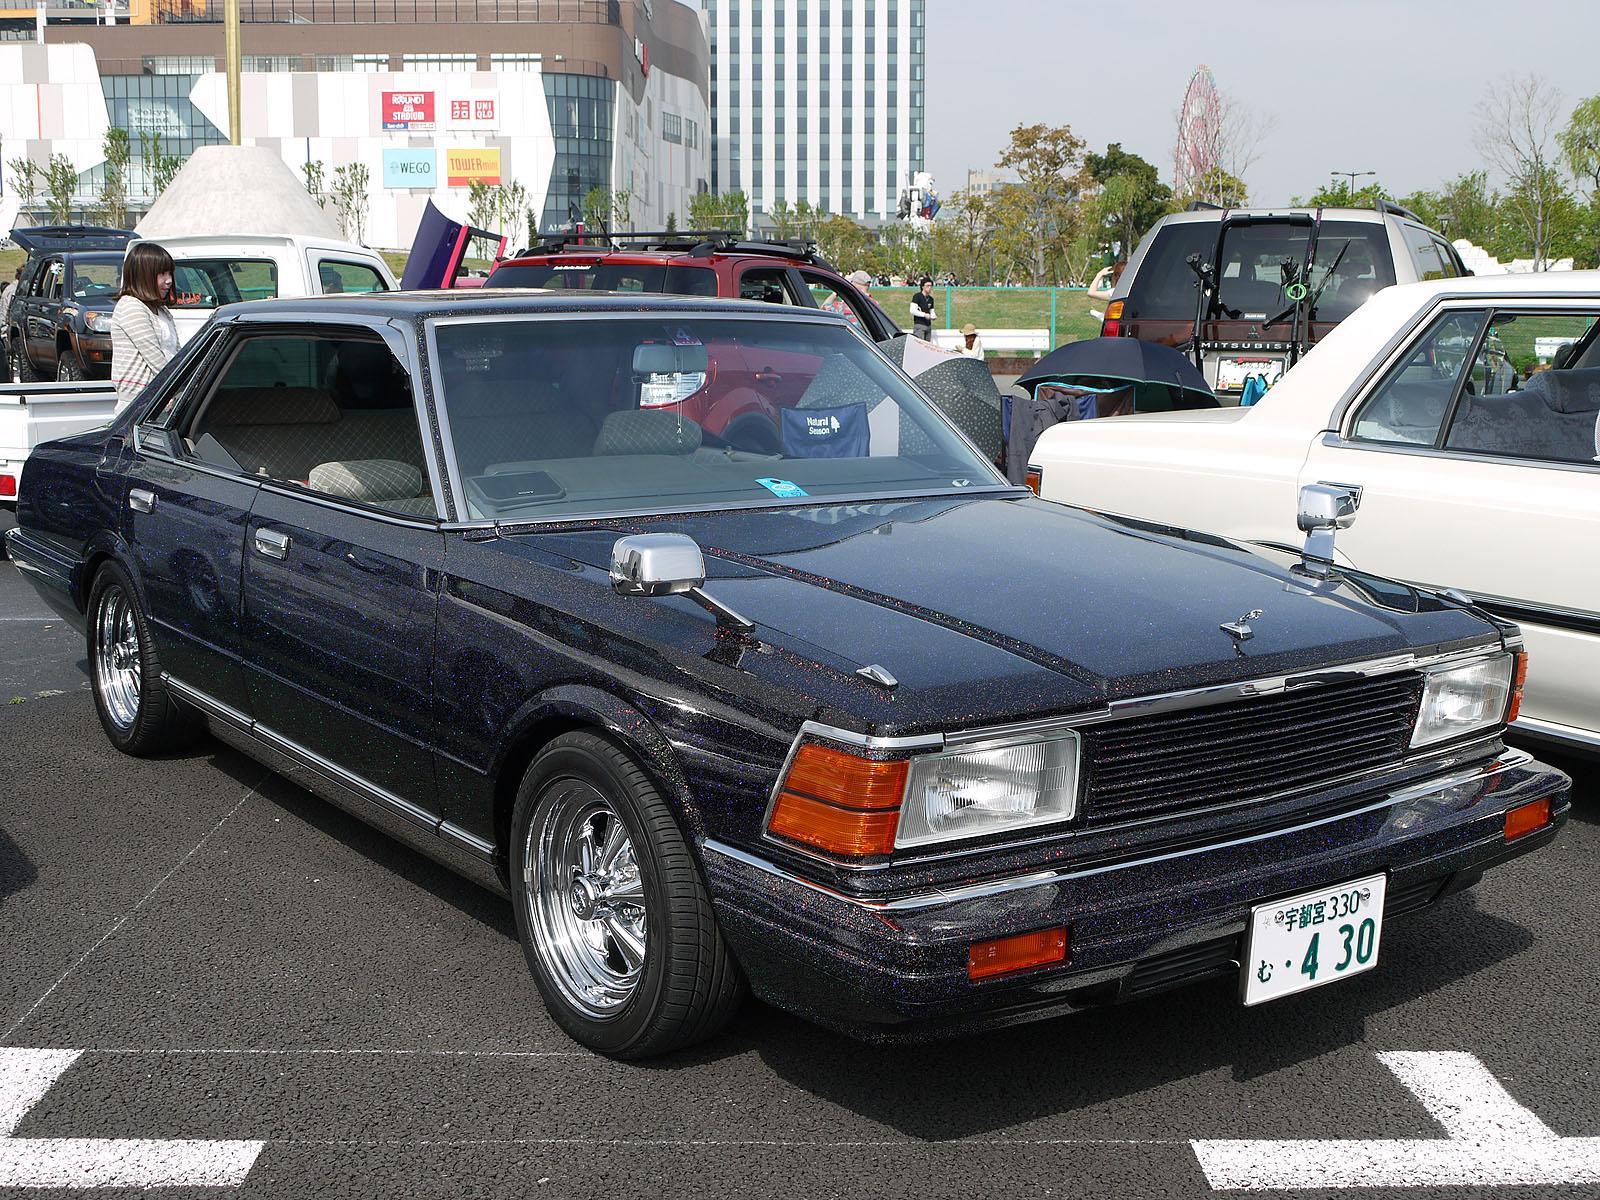 Nissan Cedric